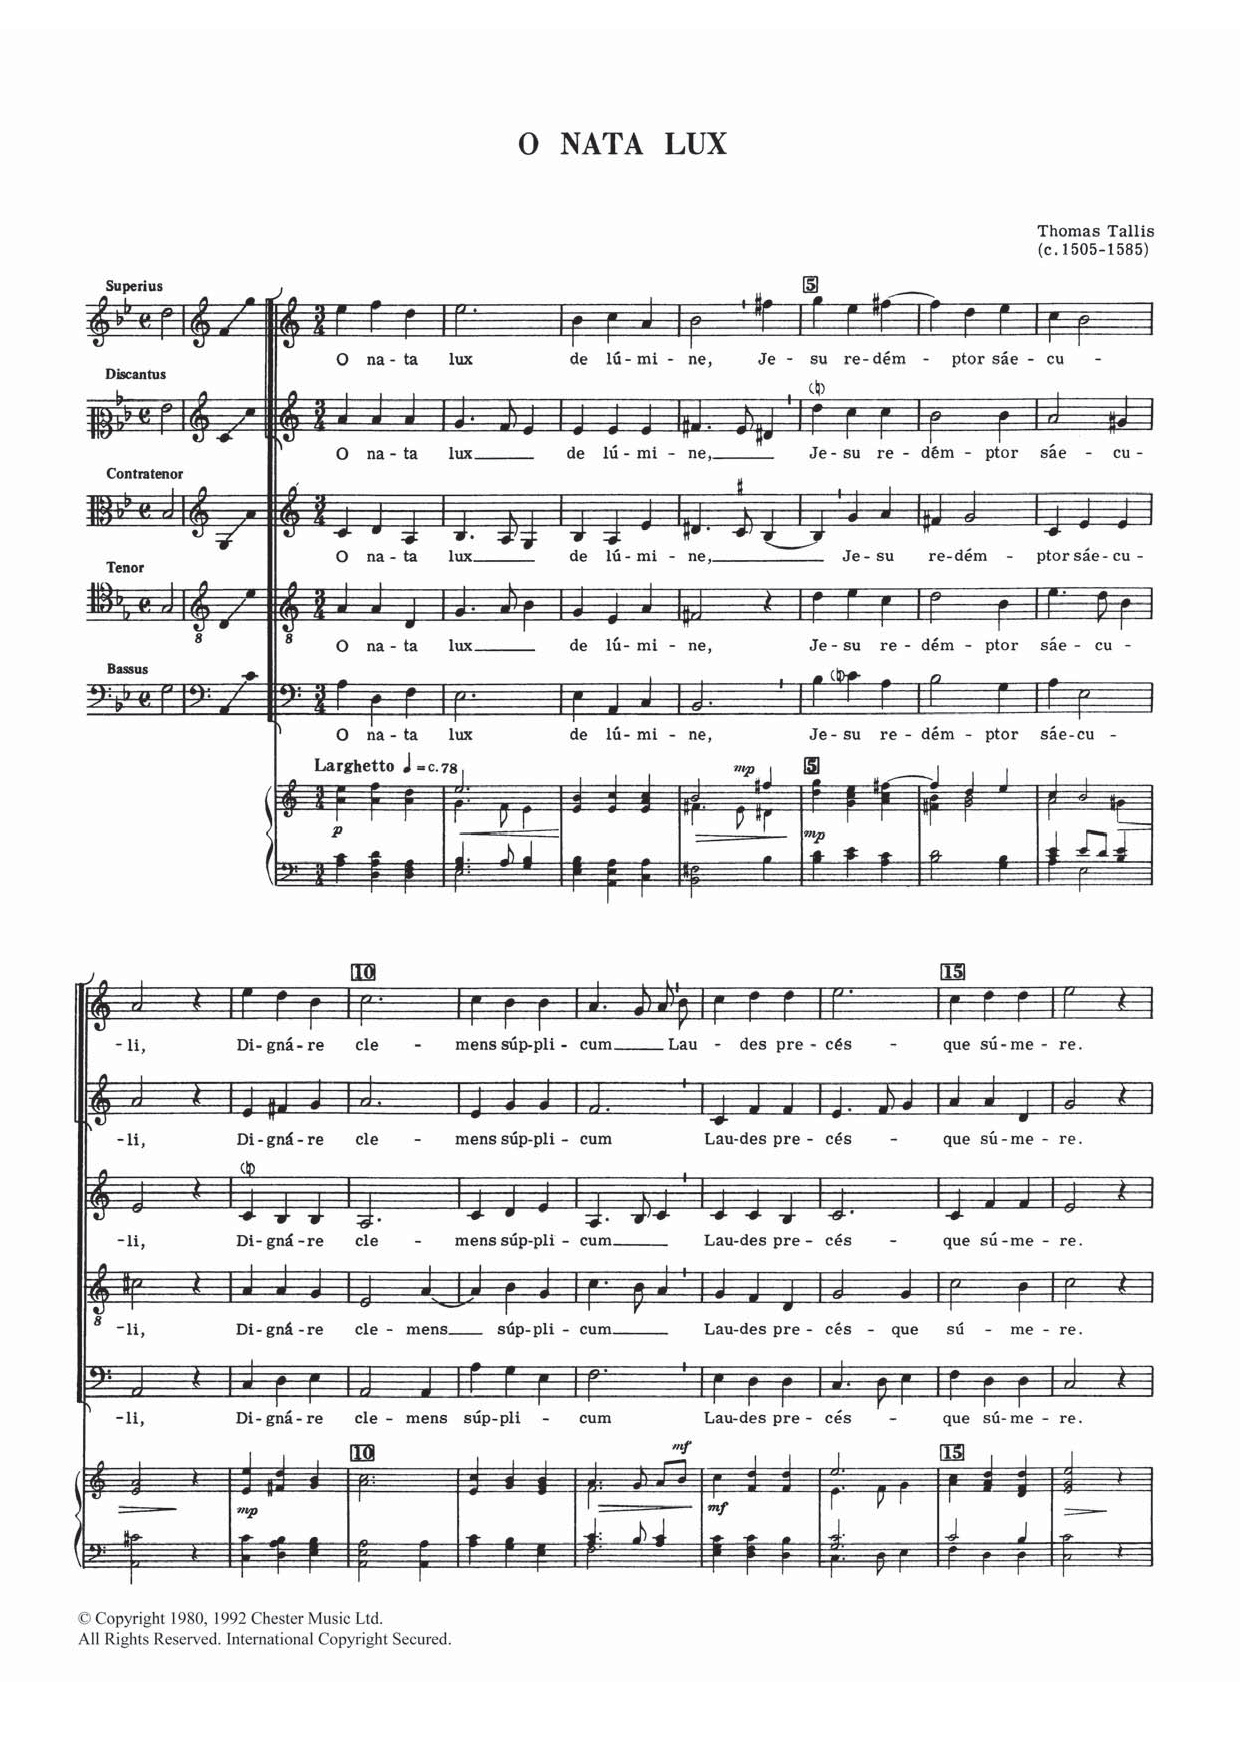 Thomas Tallis O Nata Lux Sheet Music Notes & Chords for Choral SSATB - Download or Print PDF